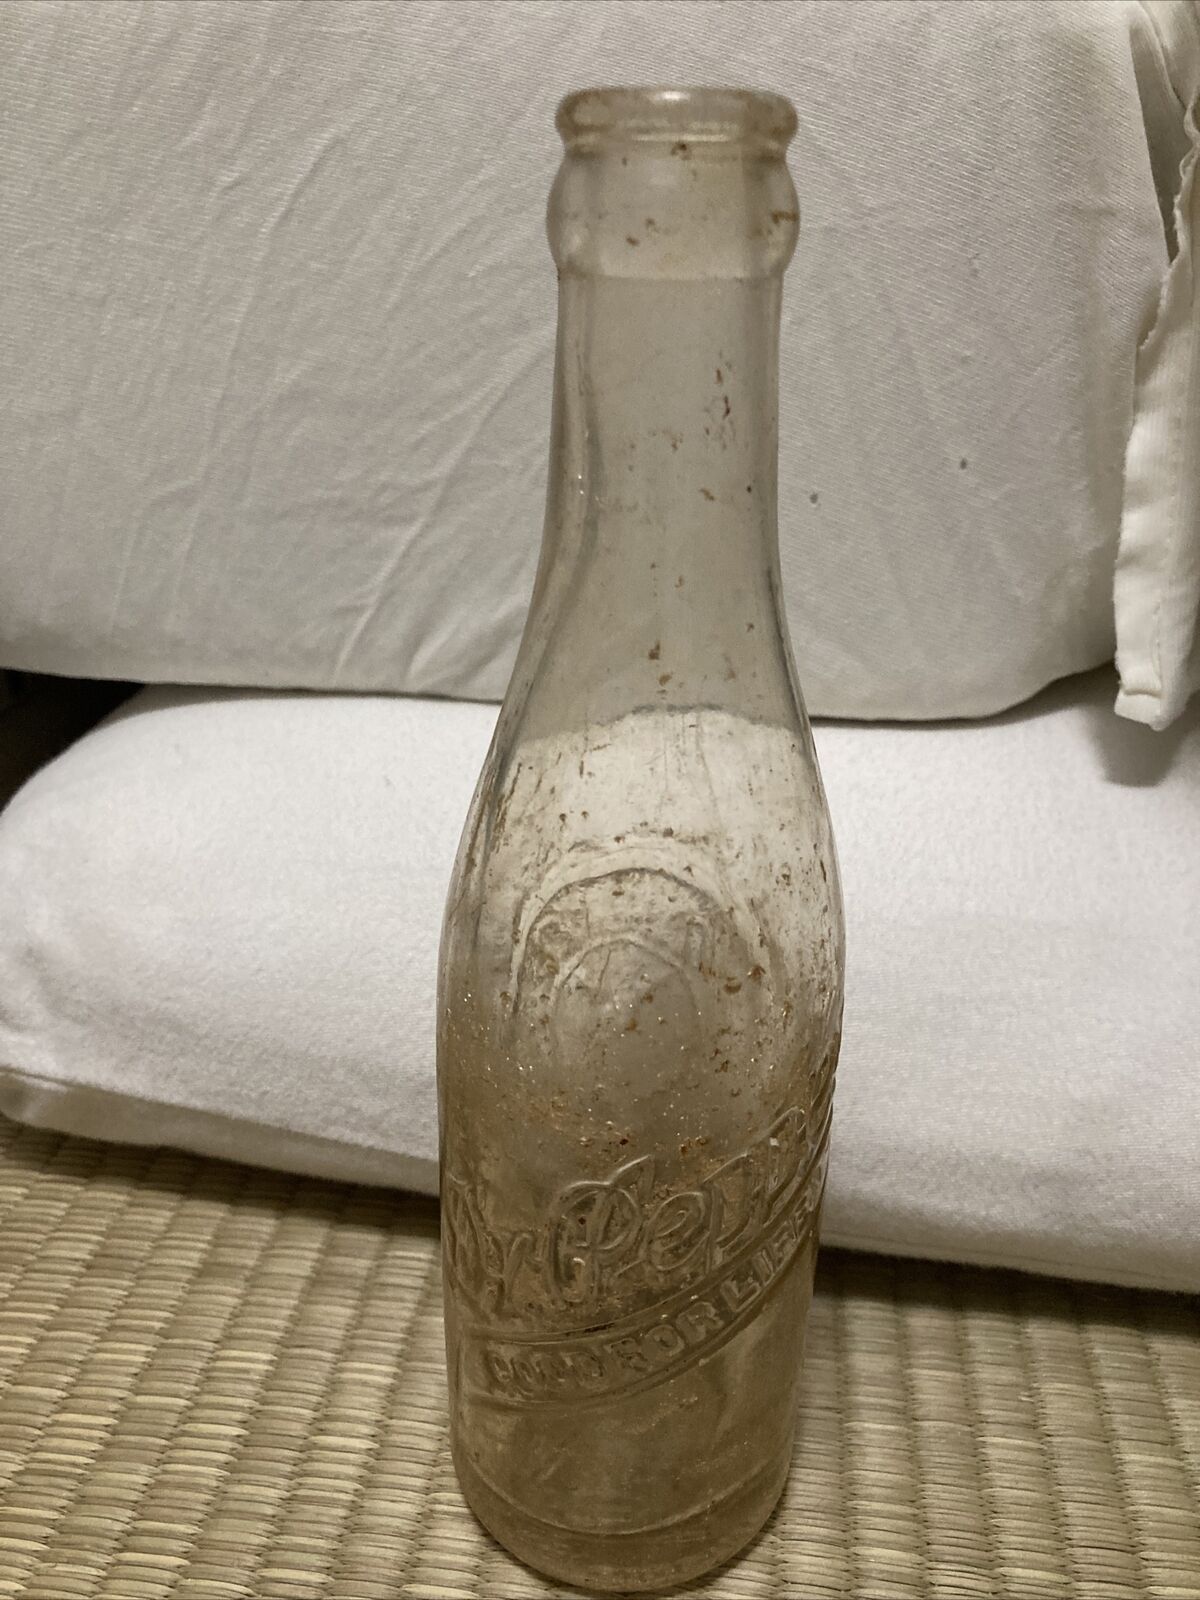 6 1/2 Oz. Embossed 1930’s 10 2 4 Dr pepper Soda Bottle, Cincinnati Ohio